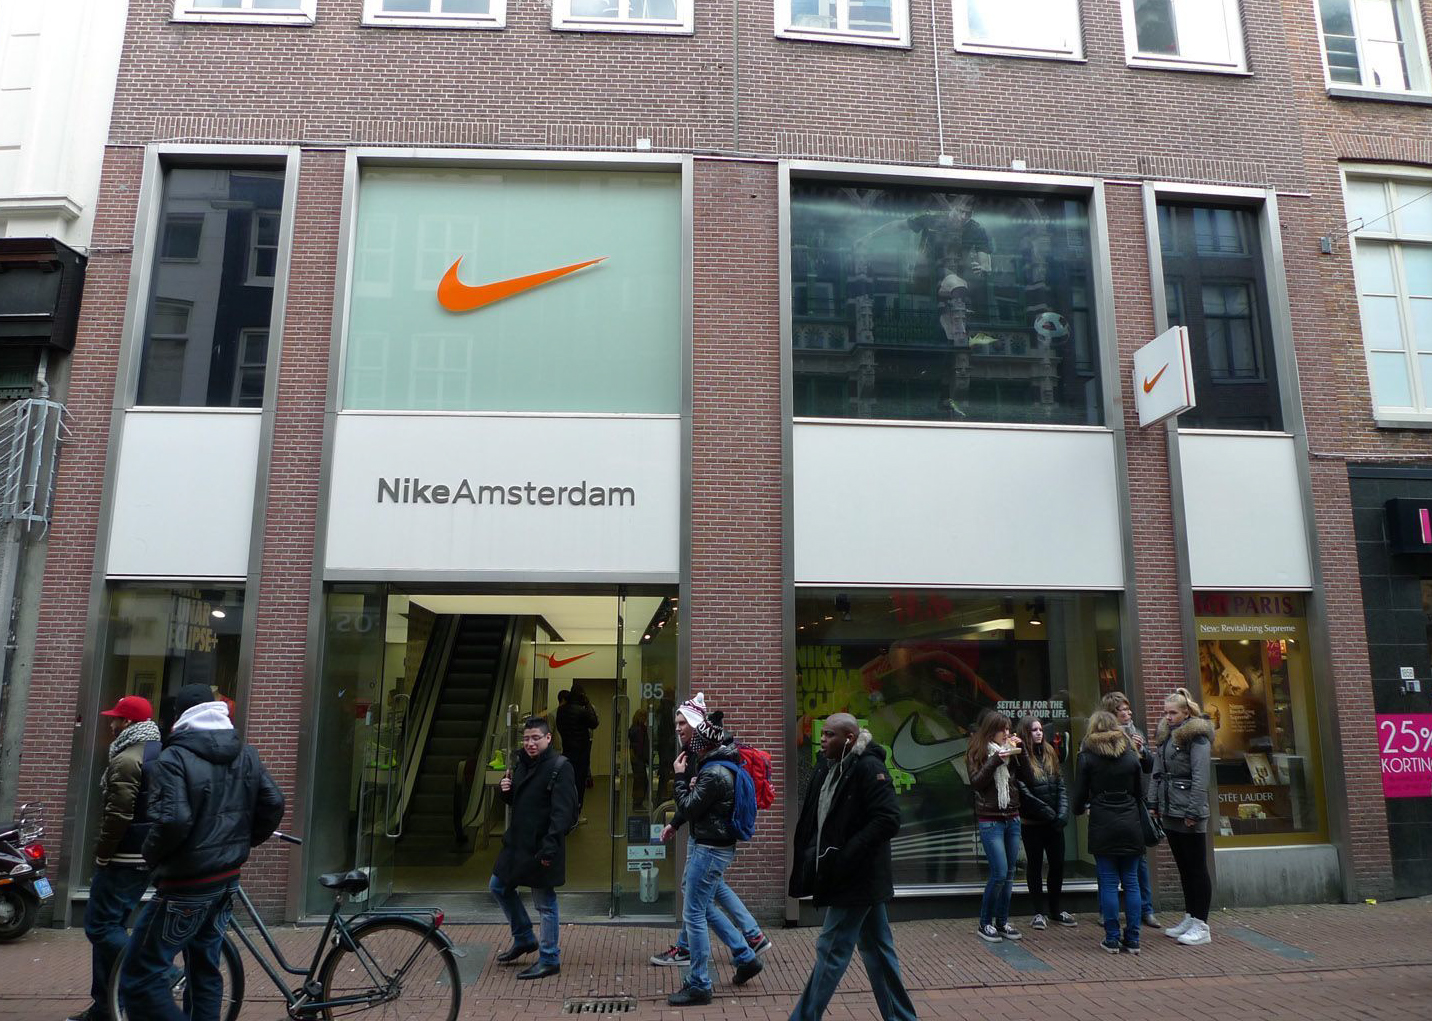 rib Geduld Overtollig Nike facade kalverstraat amsterdam - EWP